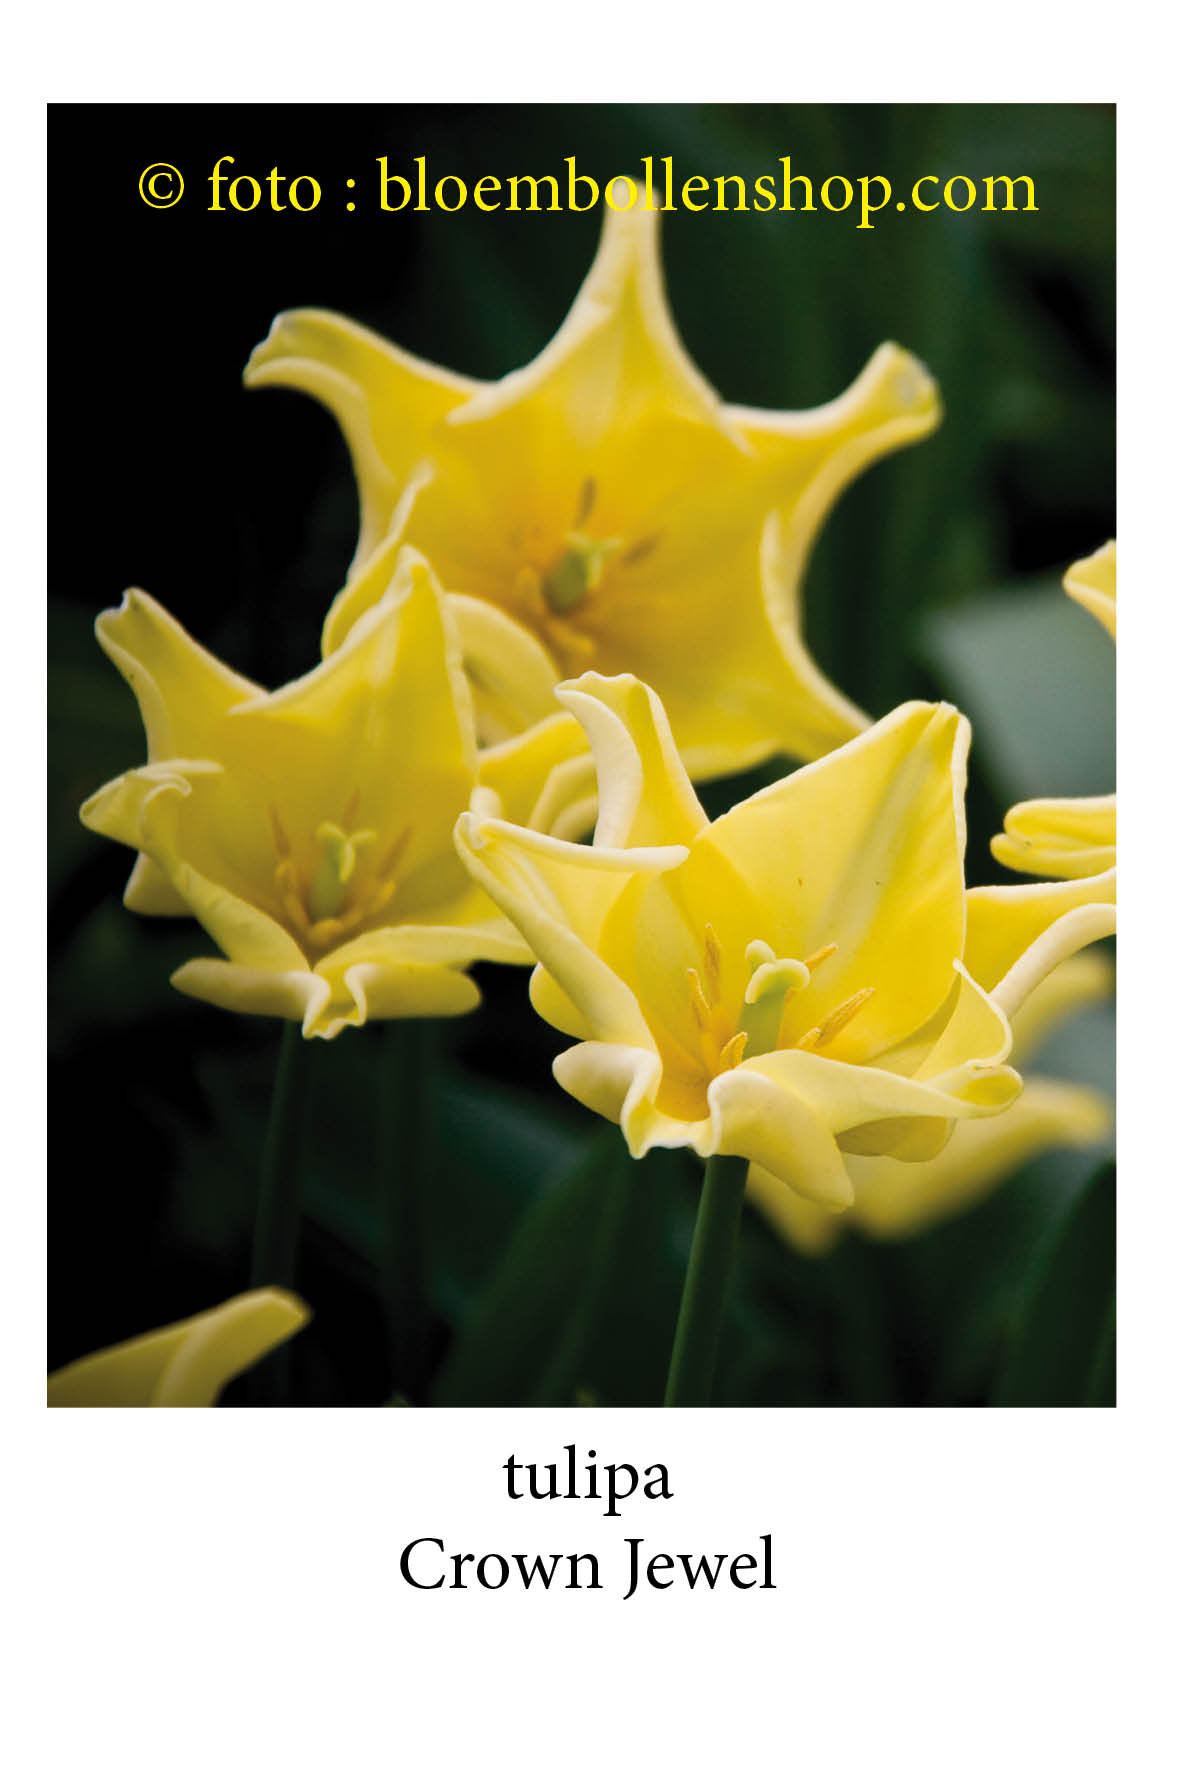 Tulpen Crown Jewel